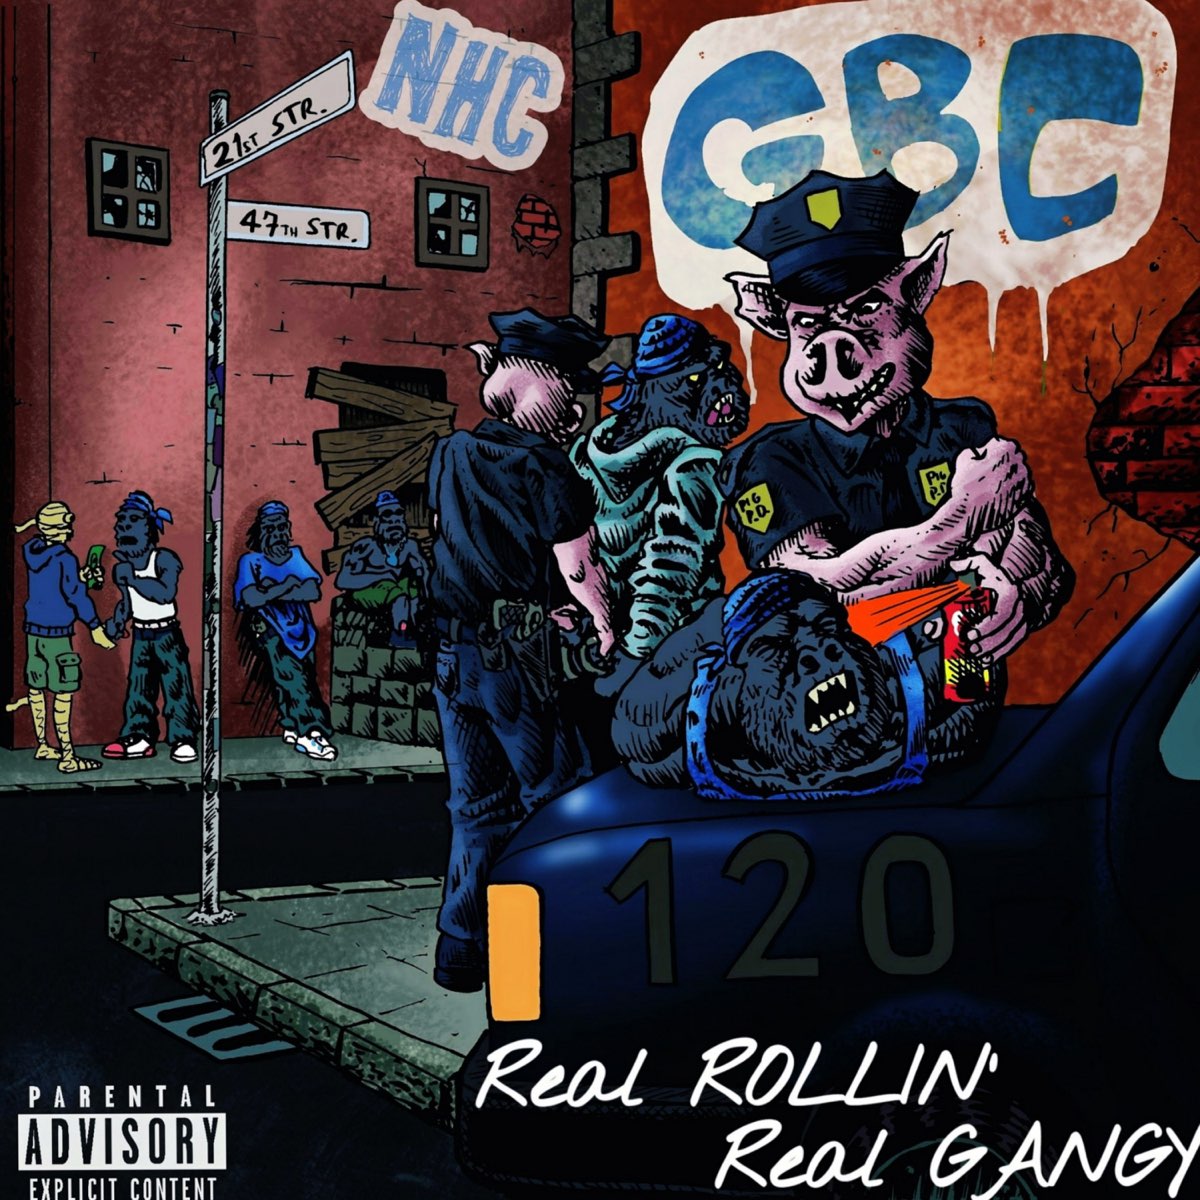 Smigg Dirtee & TB Miit Gang - Real Rollin' Real Gangy